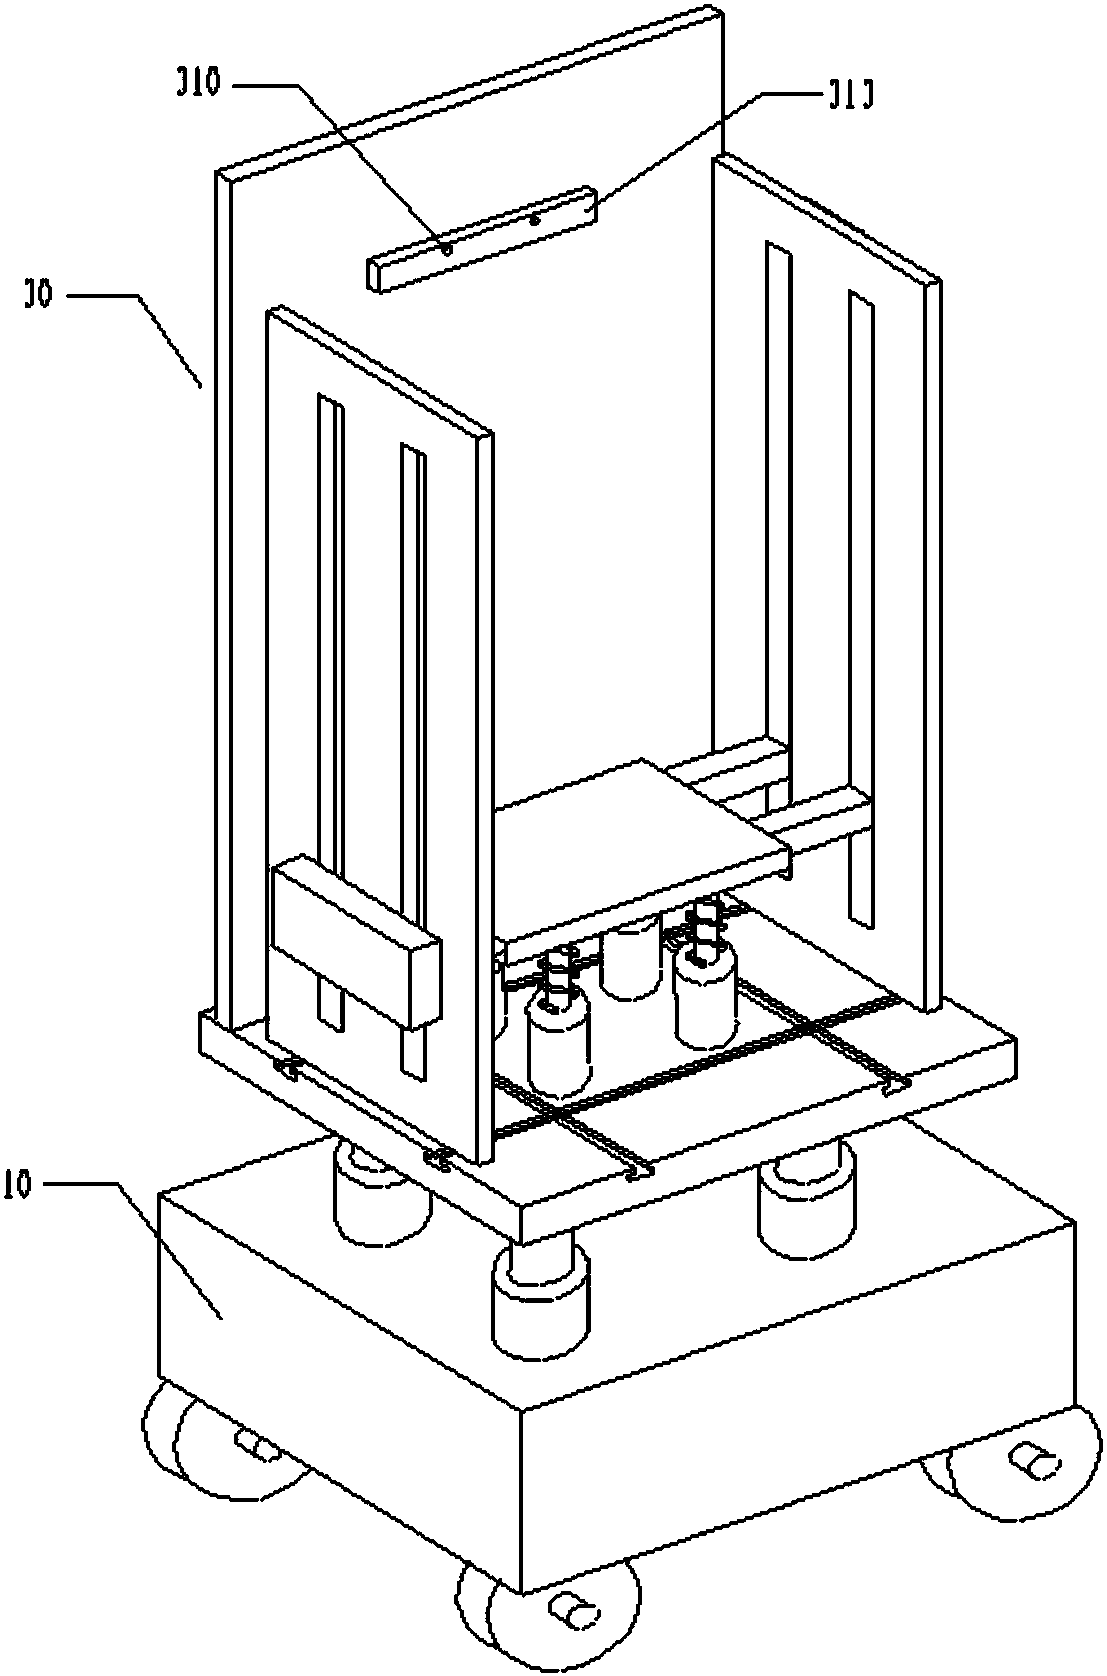 Steel plate feeding trolley in elevator production process